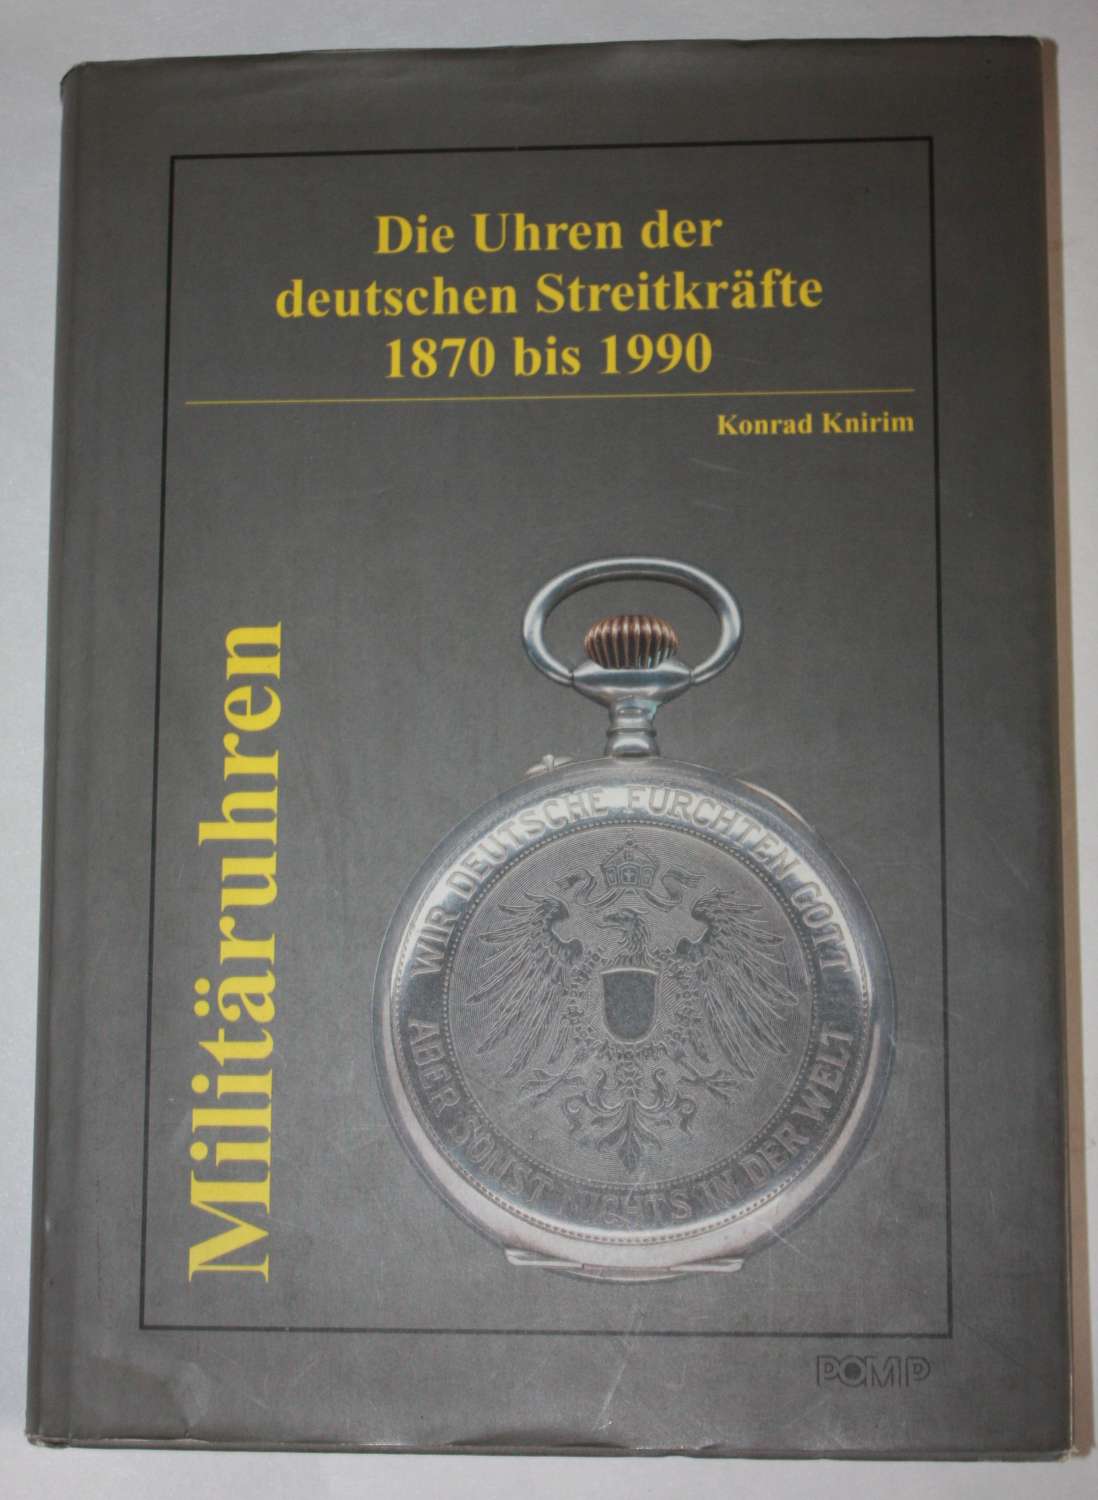 KONRAD KNIRIM WORLD RENOWNED BOOK ON GERMAN WATCHES 1870-1990